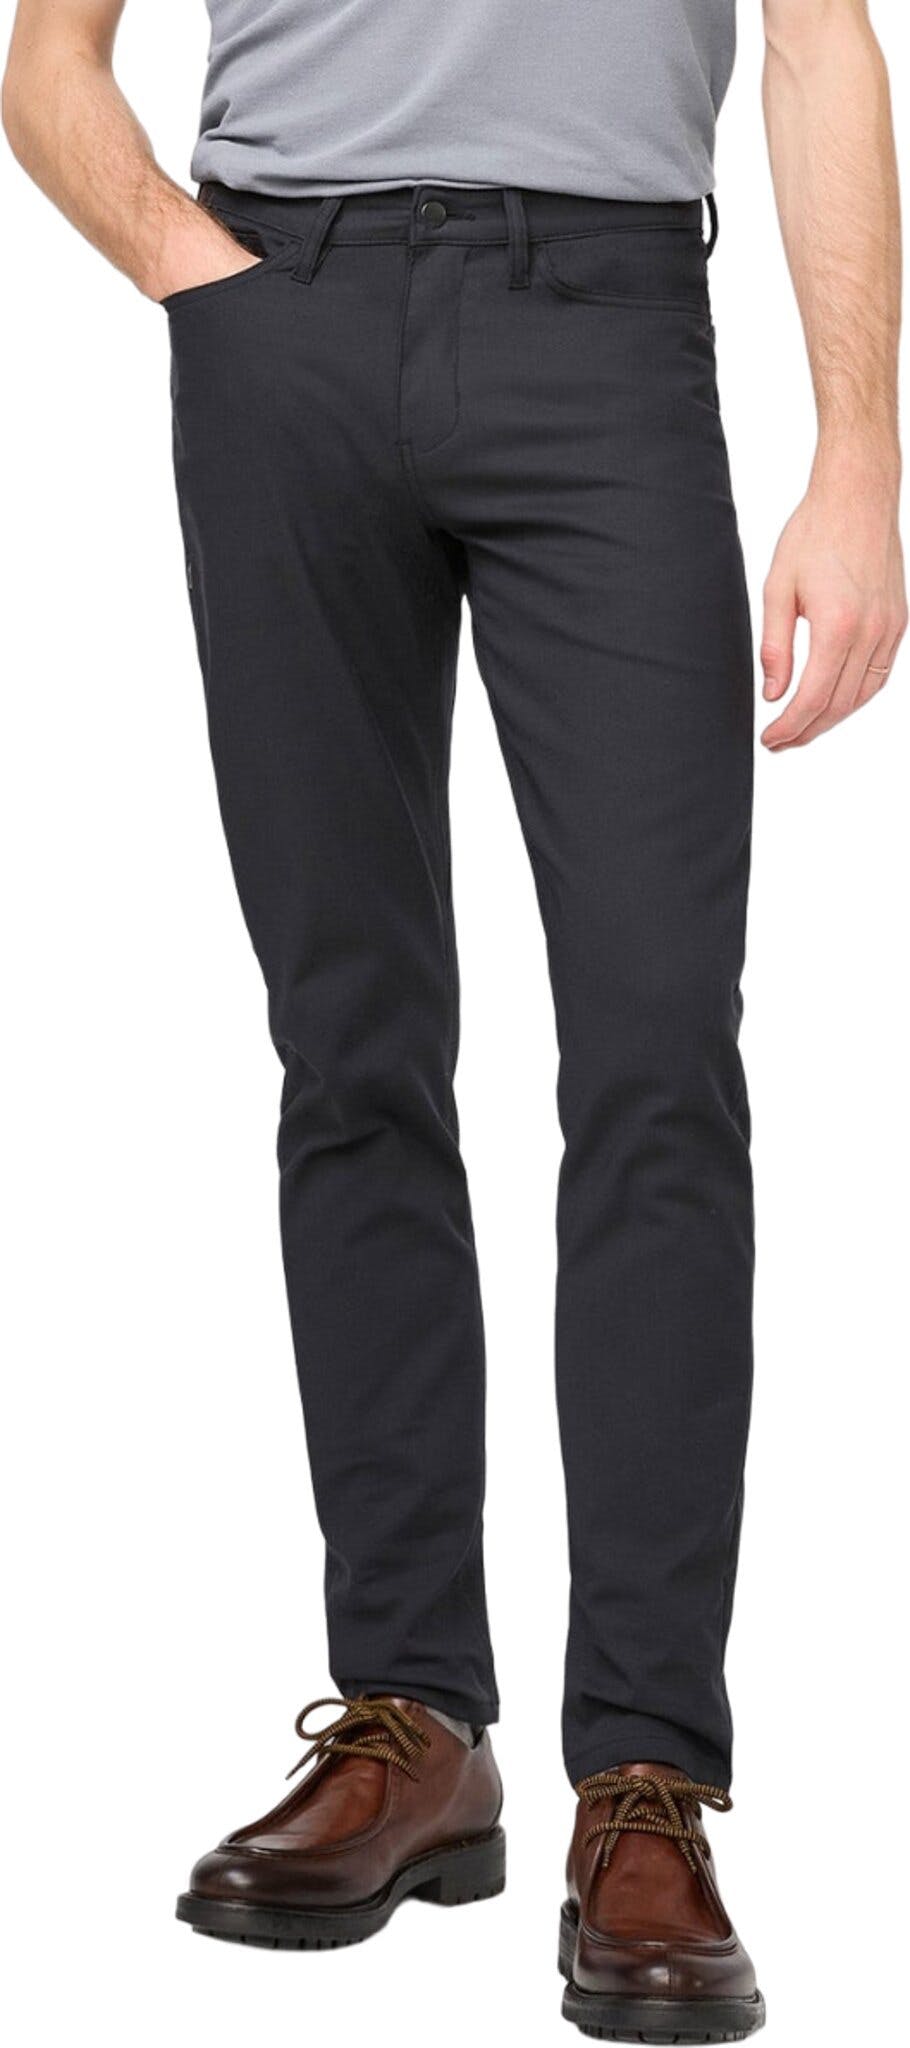 Product image for Nustretch Slim 5-Pocket Pant - Men's